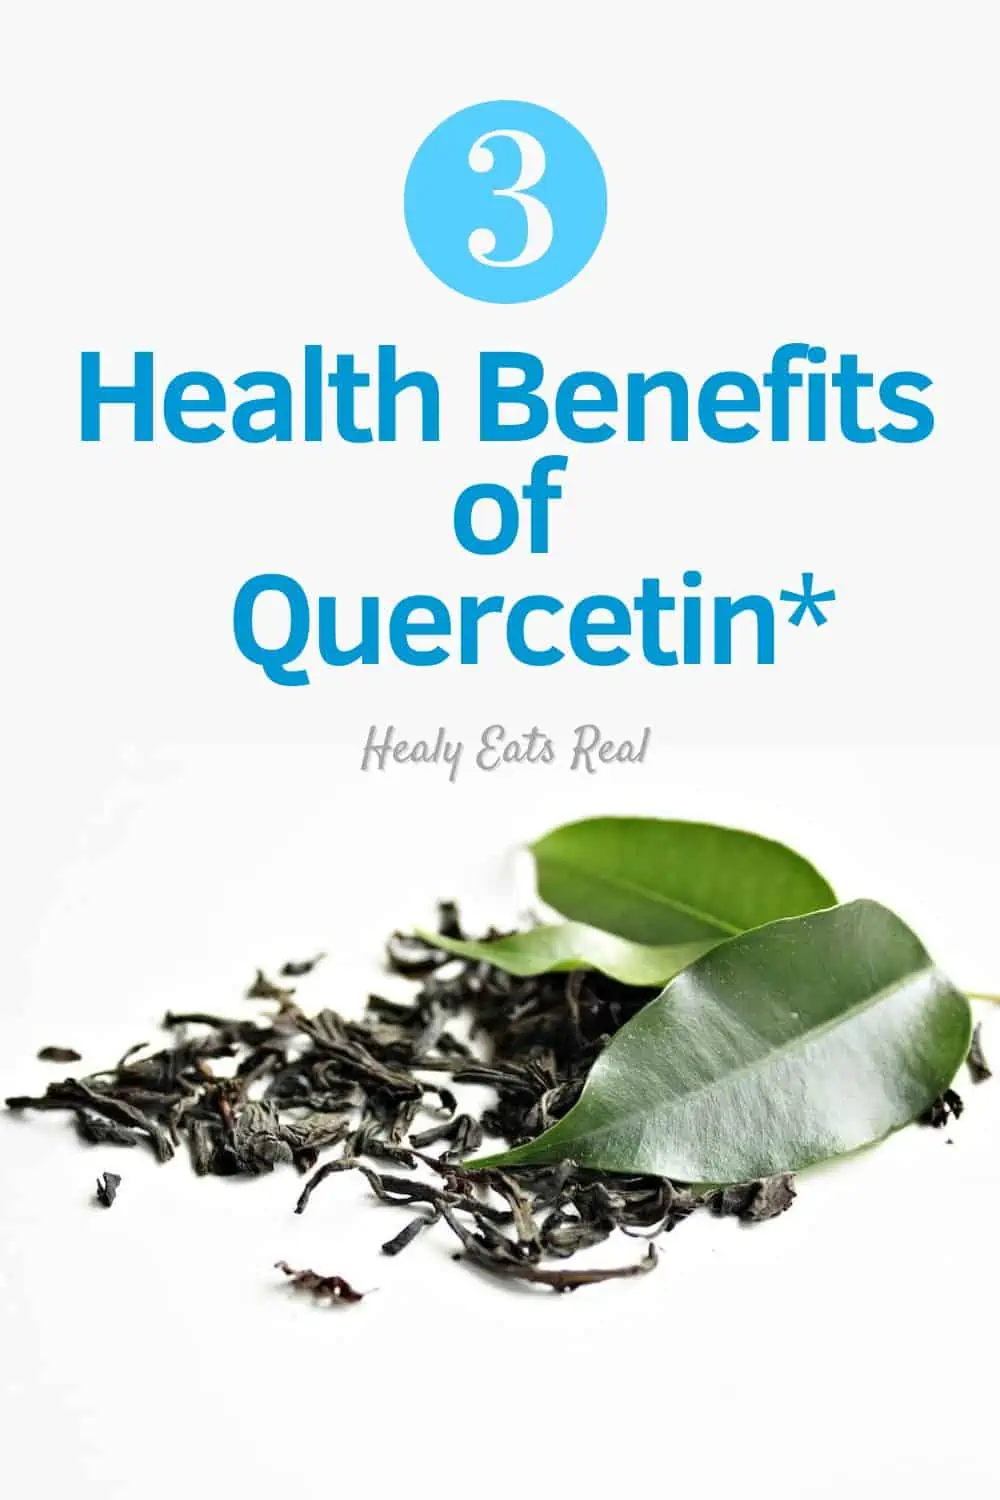 3 Health Benefits of Quercetin*